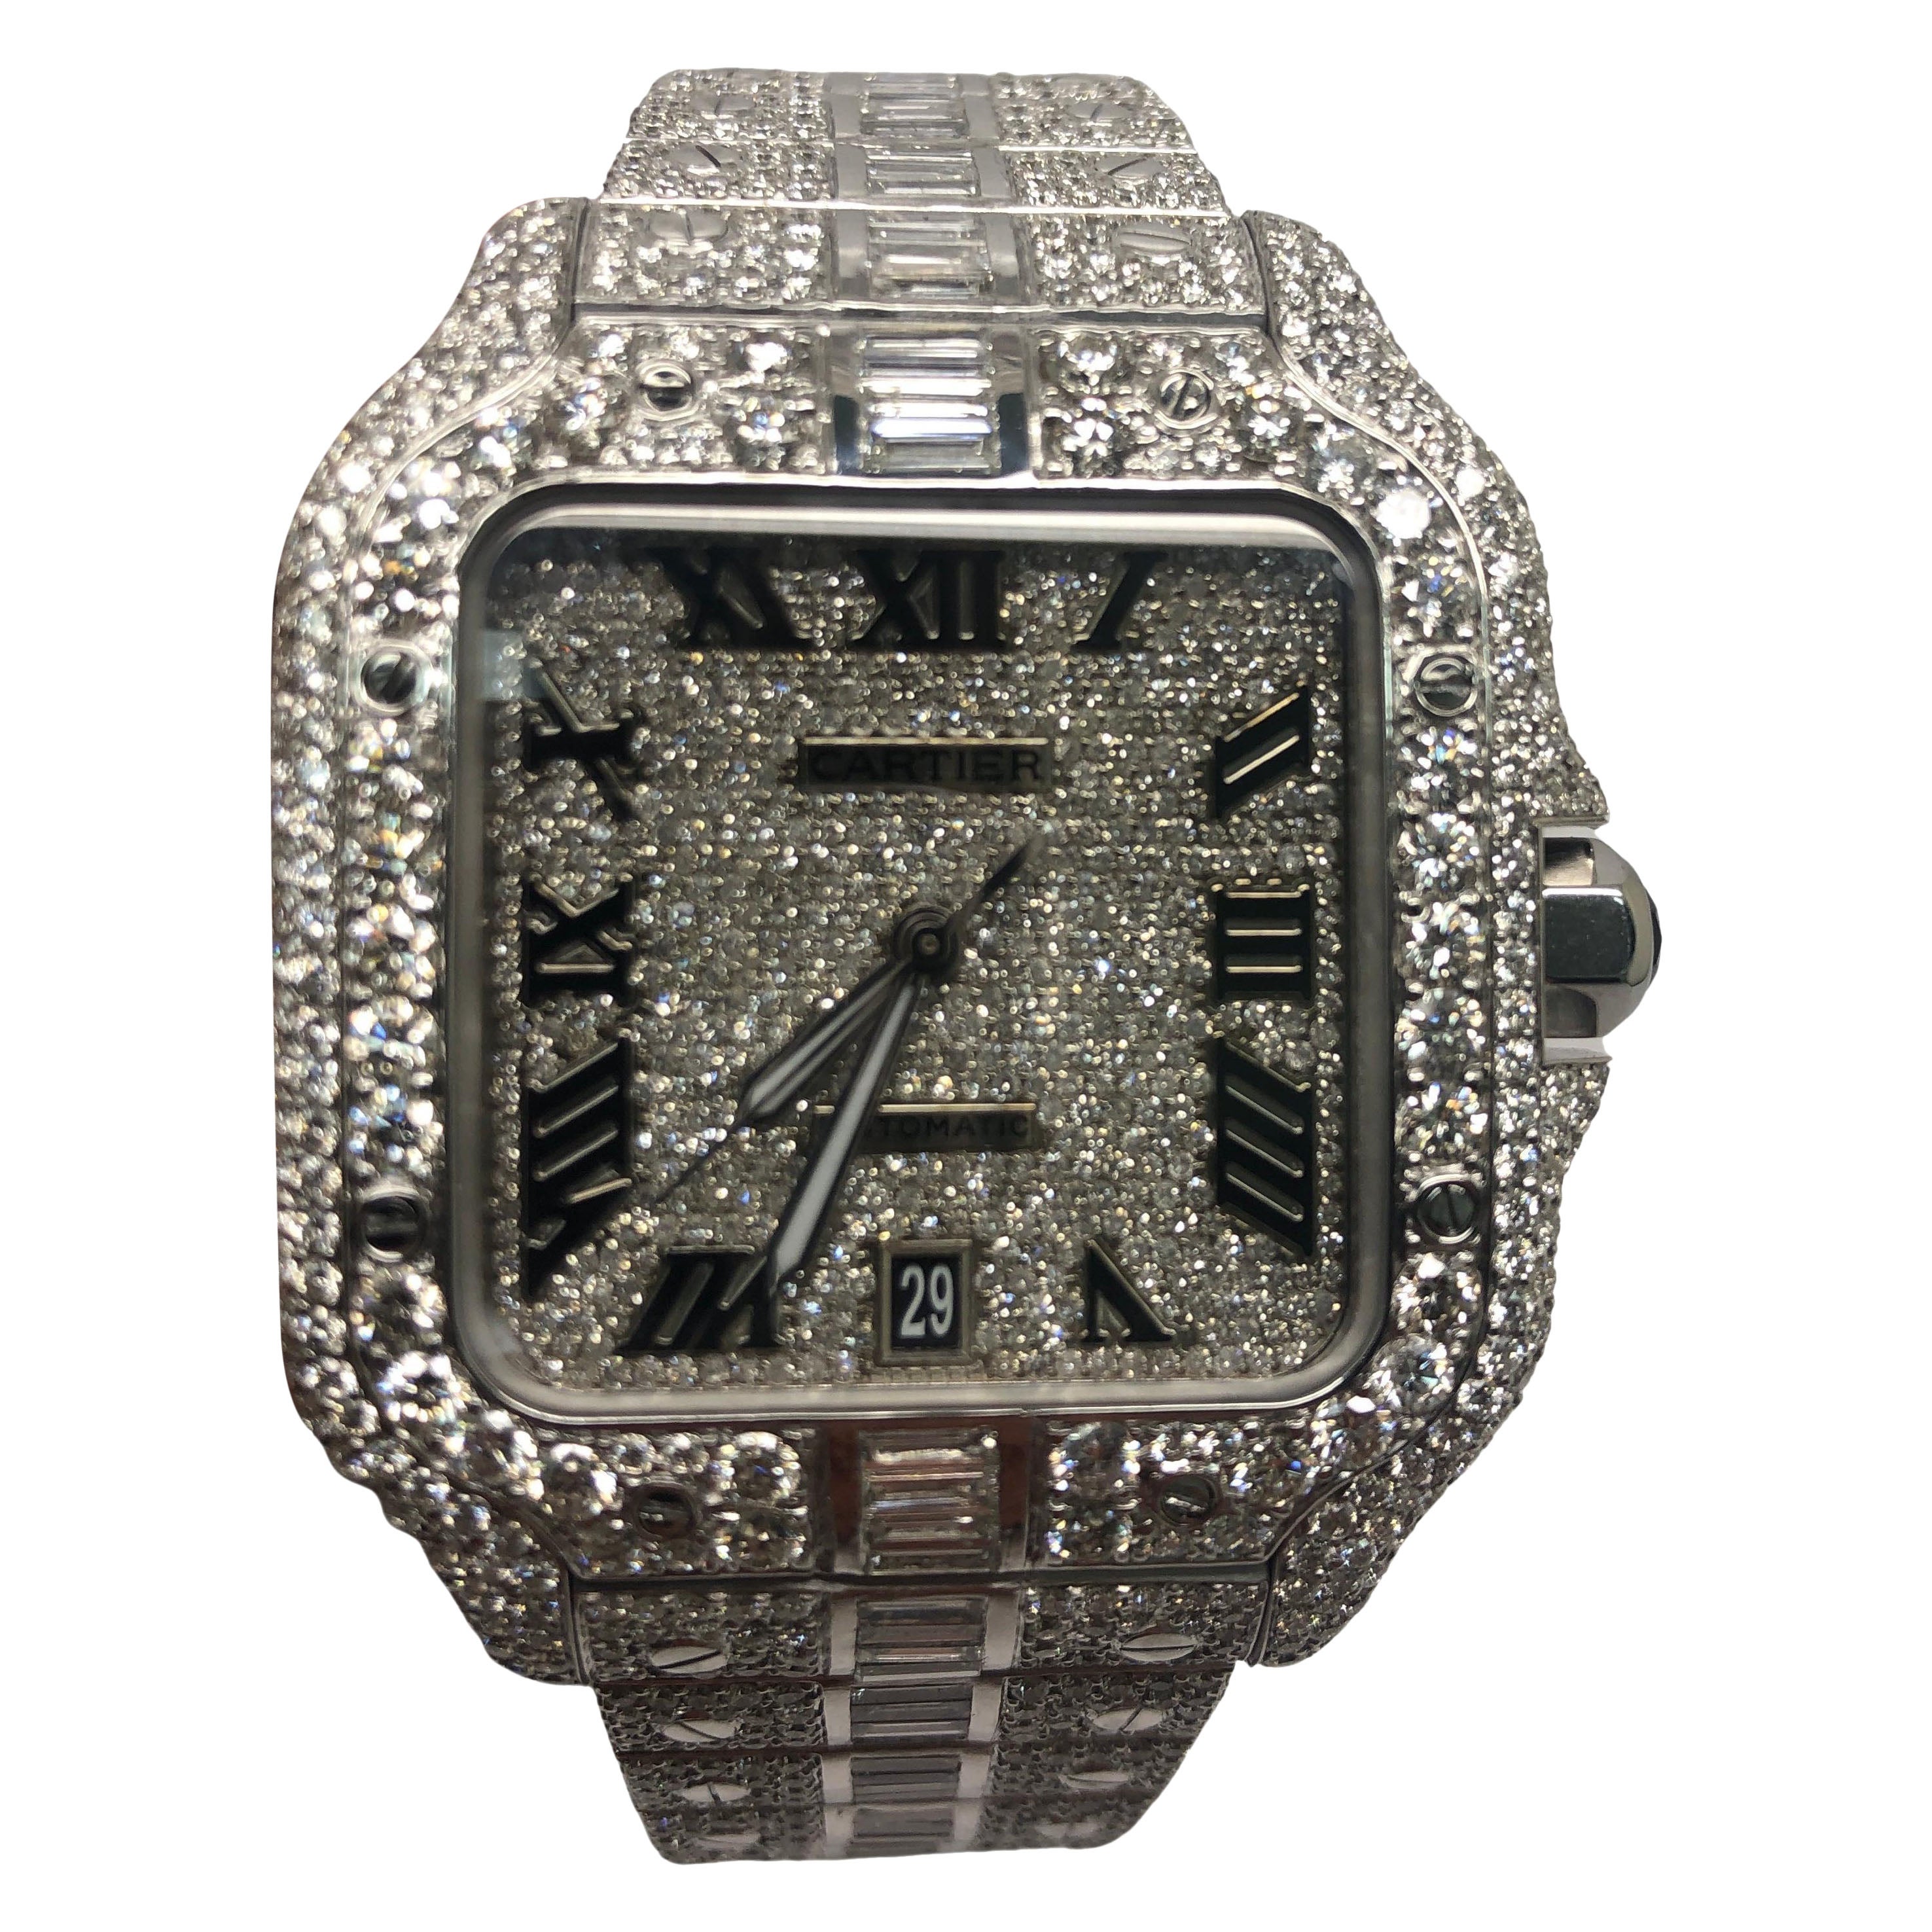 Cartier Santos Custom Iced Out VVS Emerald Cut Diamond Roman Numeral Watch